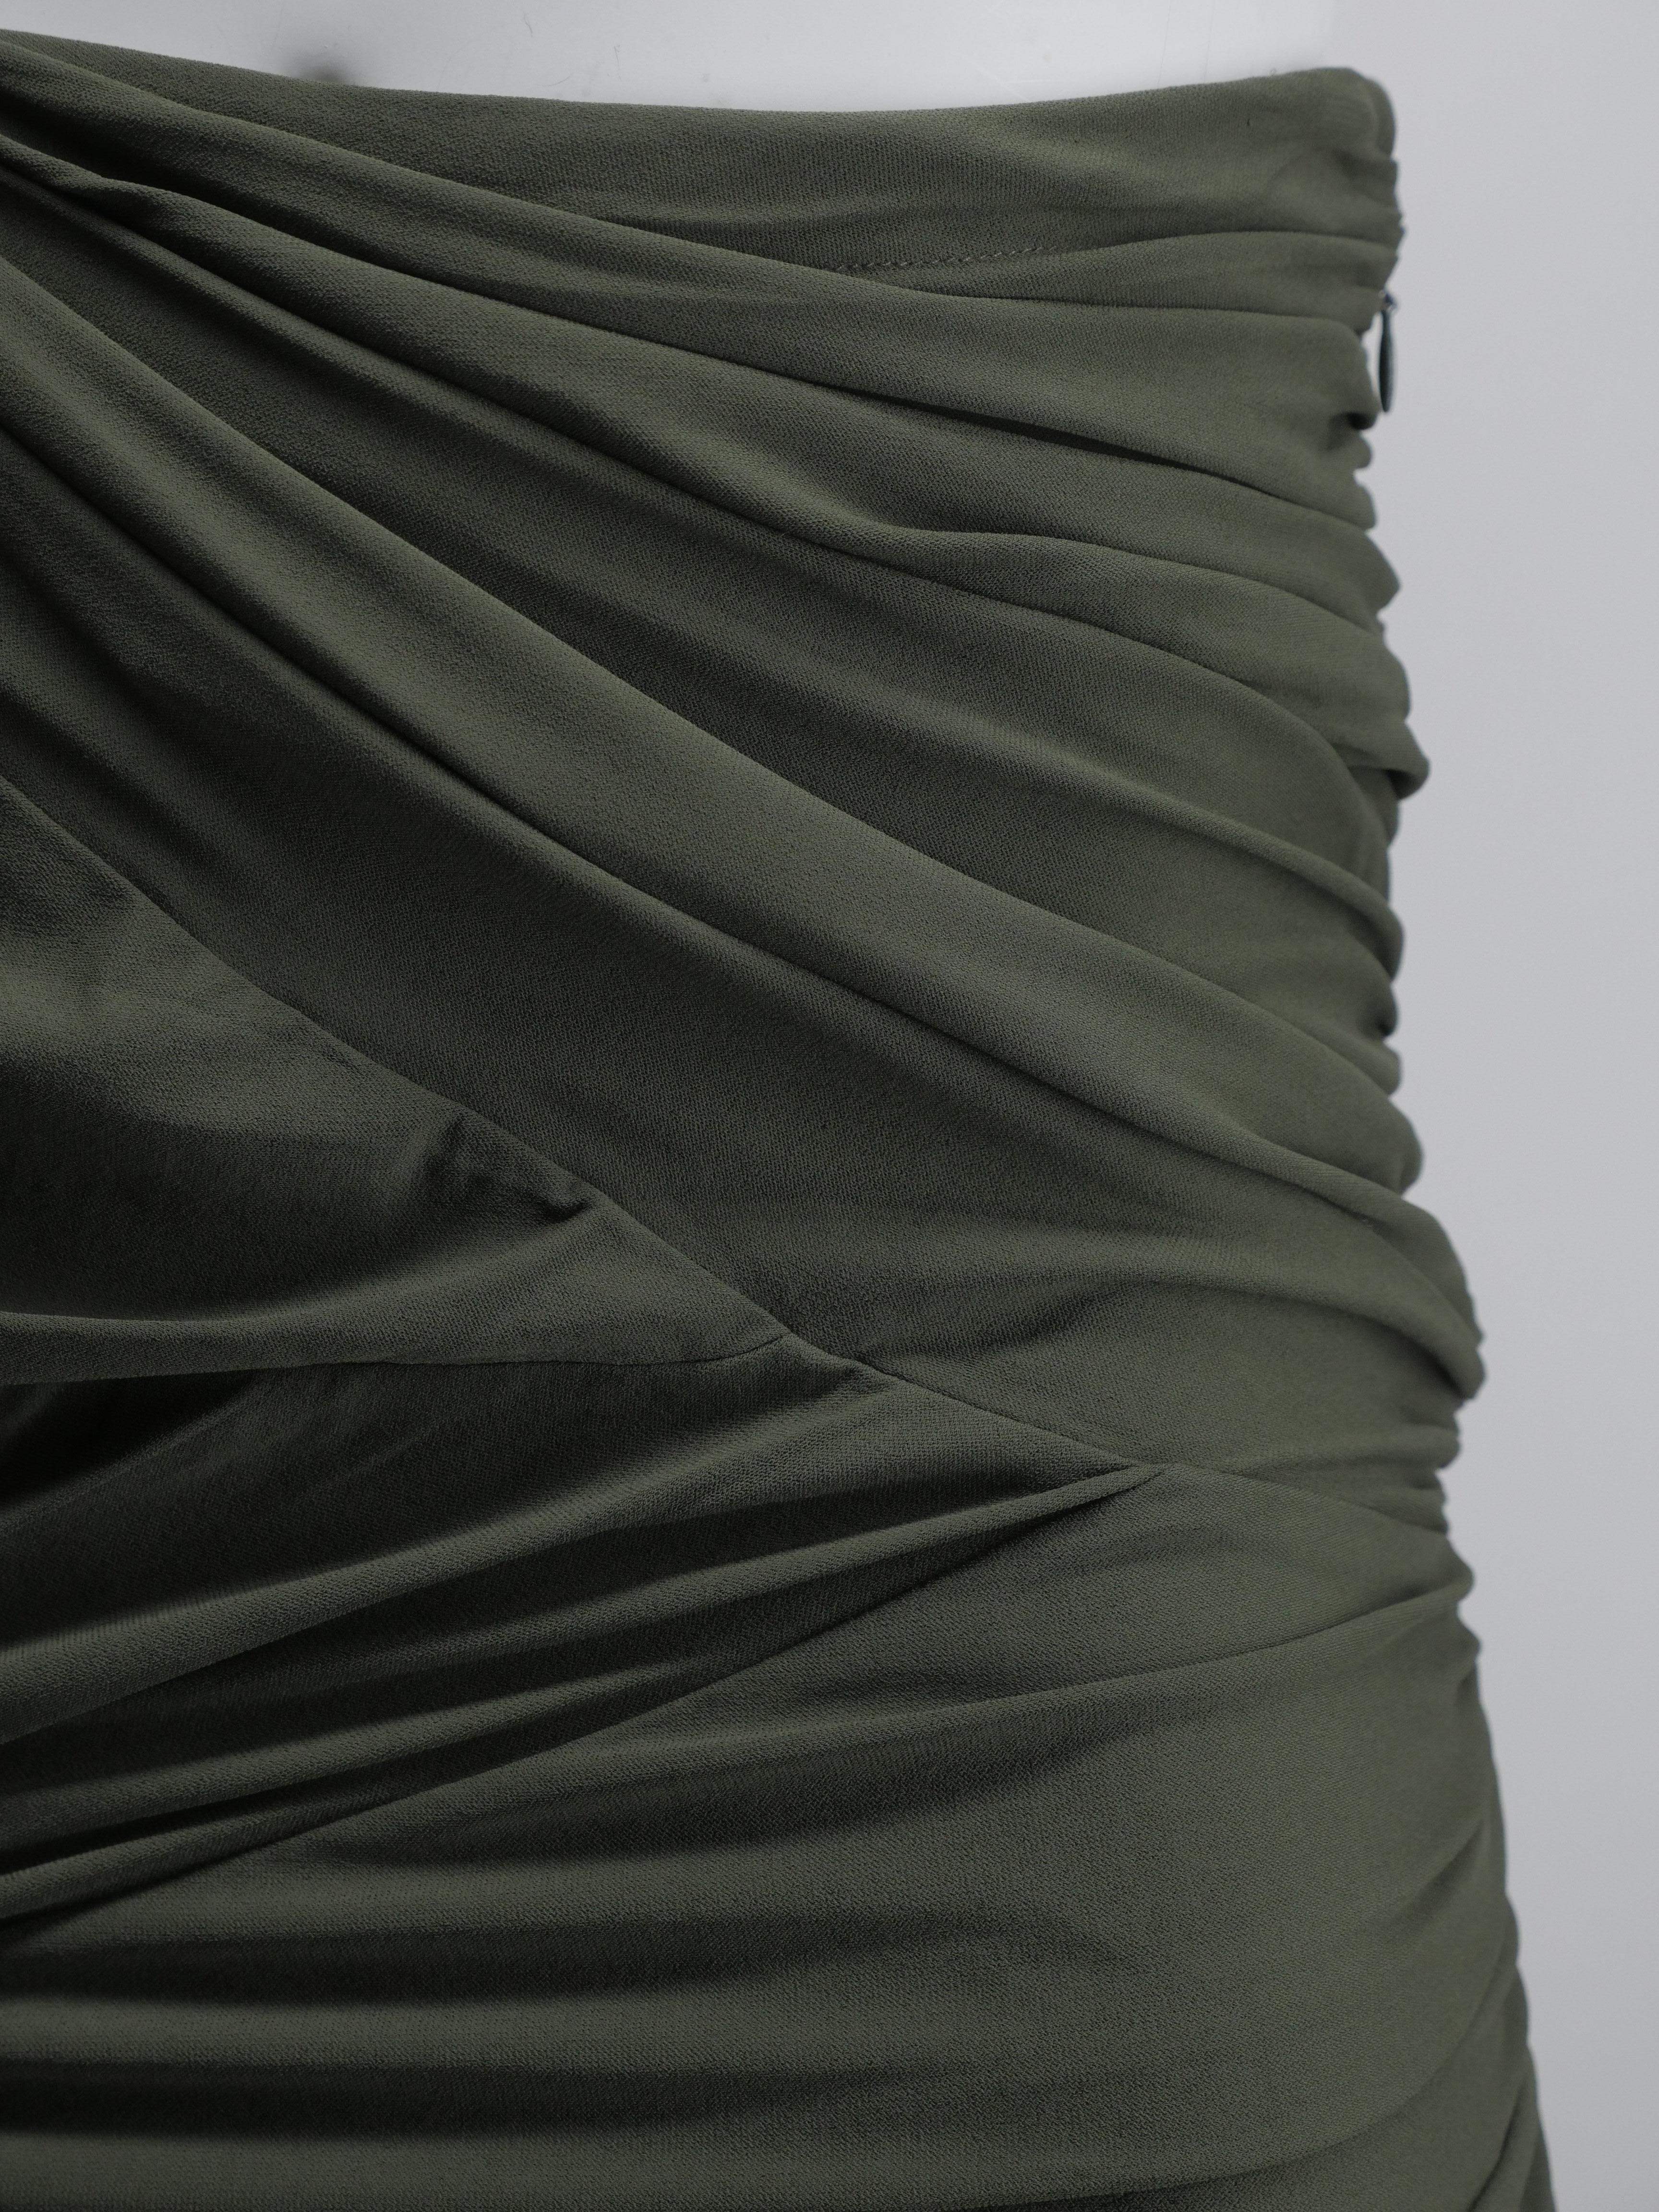 Women's or Men's Ralph Lauren Black Label Size 6 Olive Green Ruched Skirt